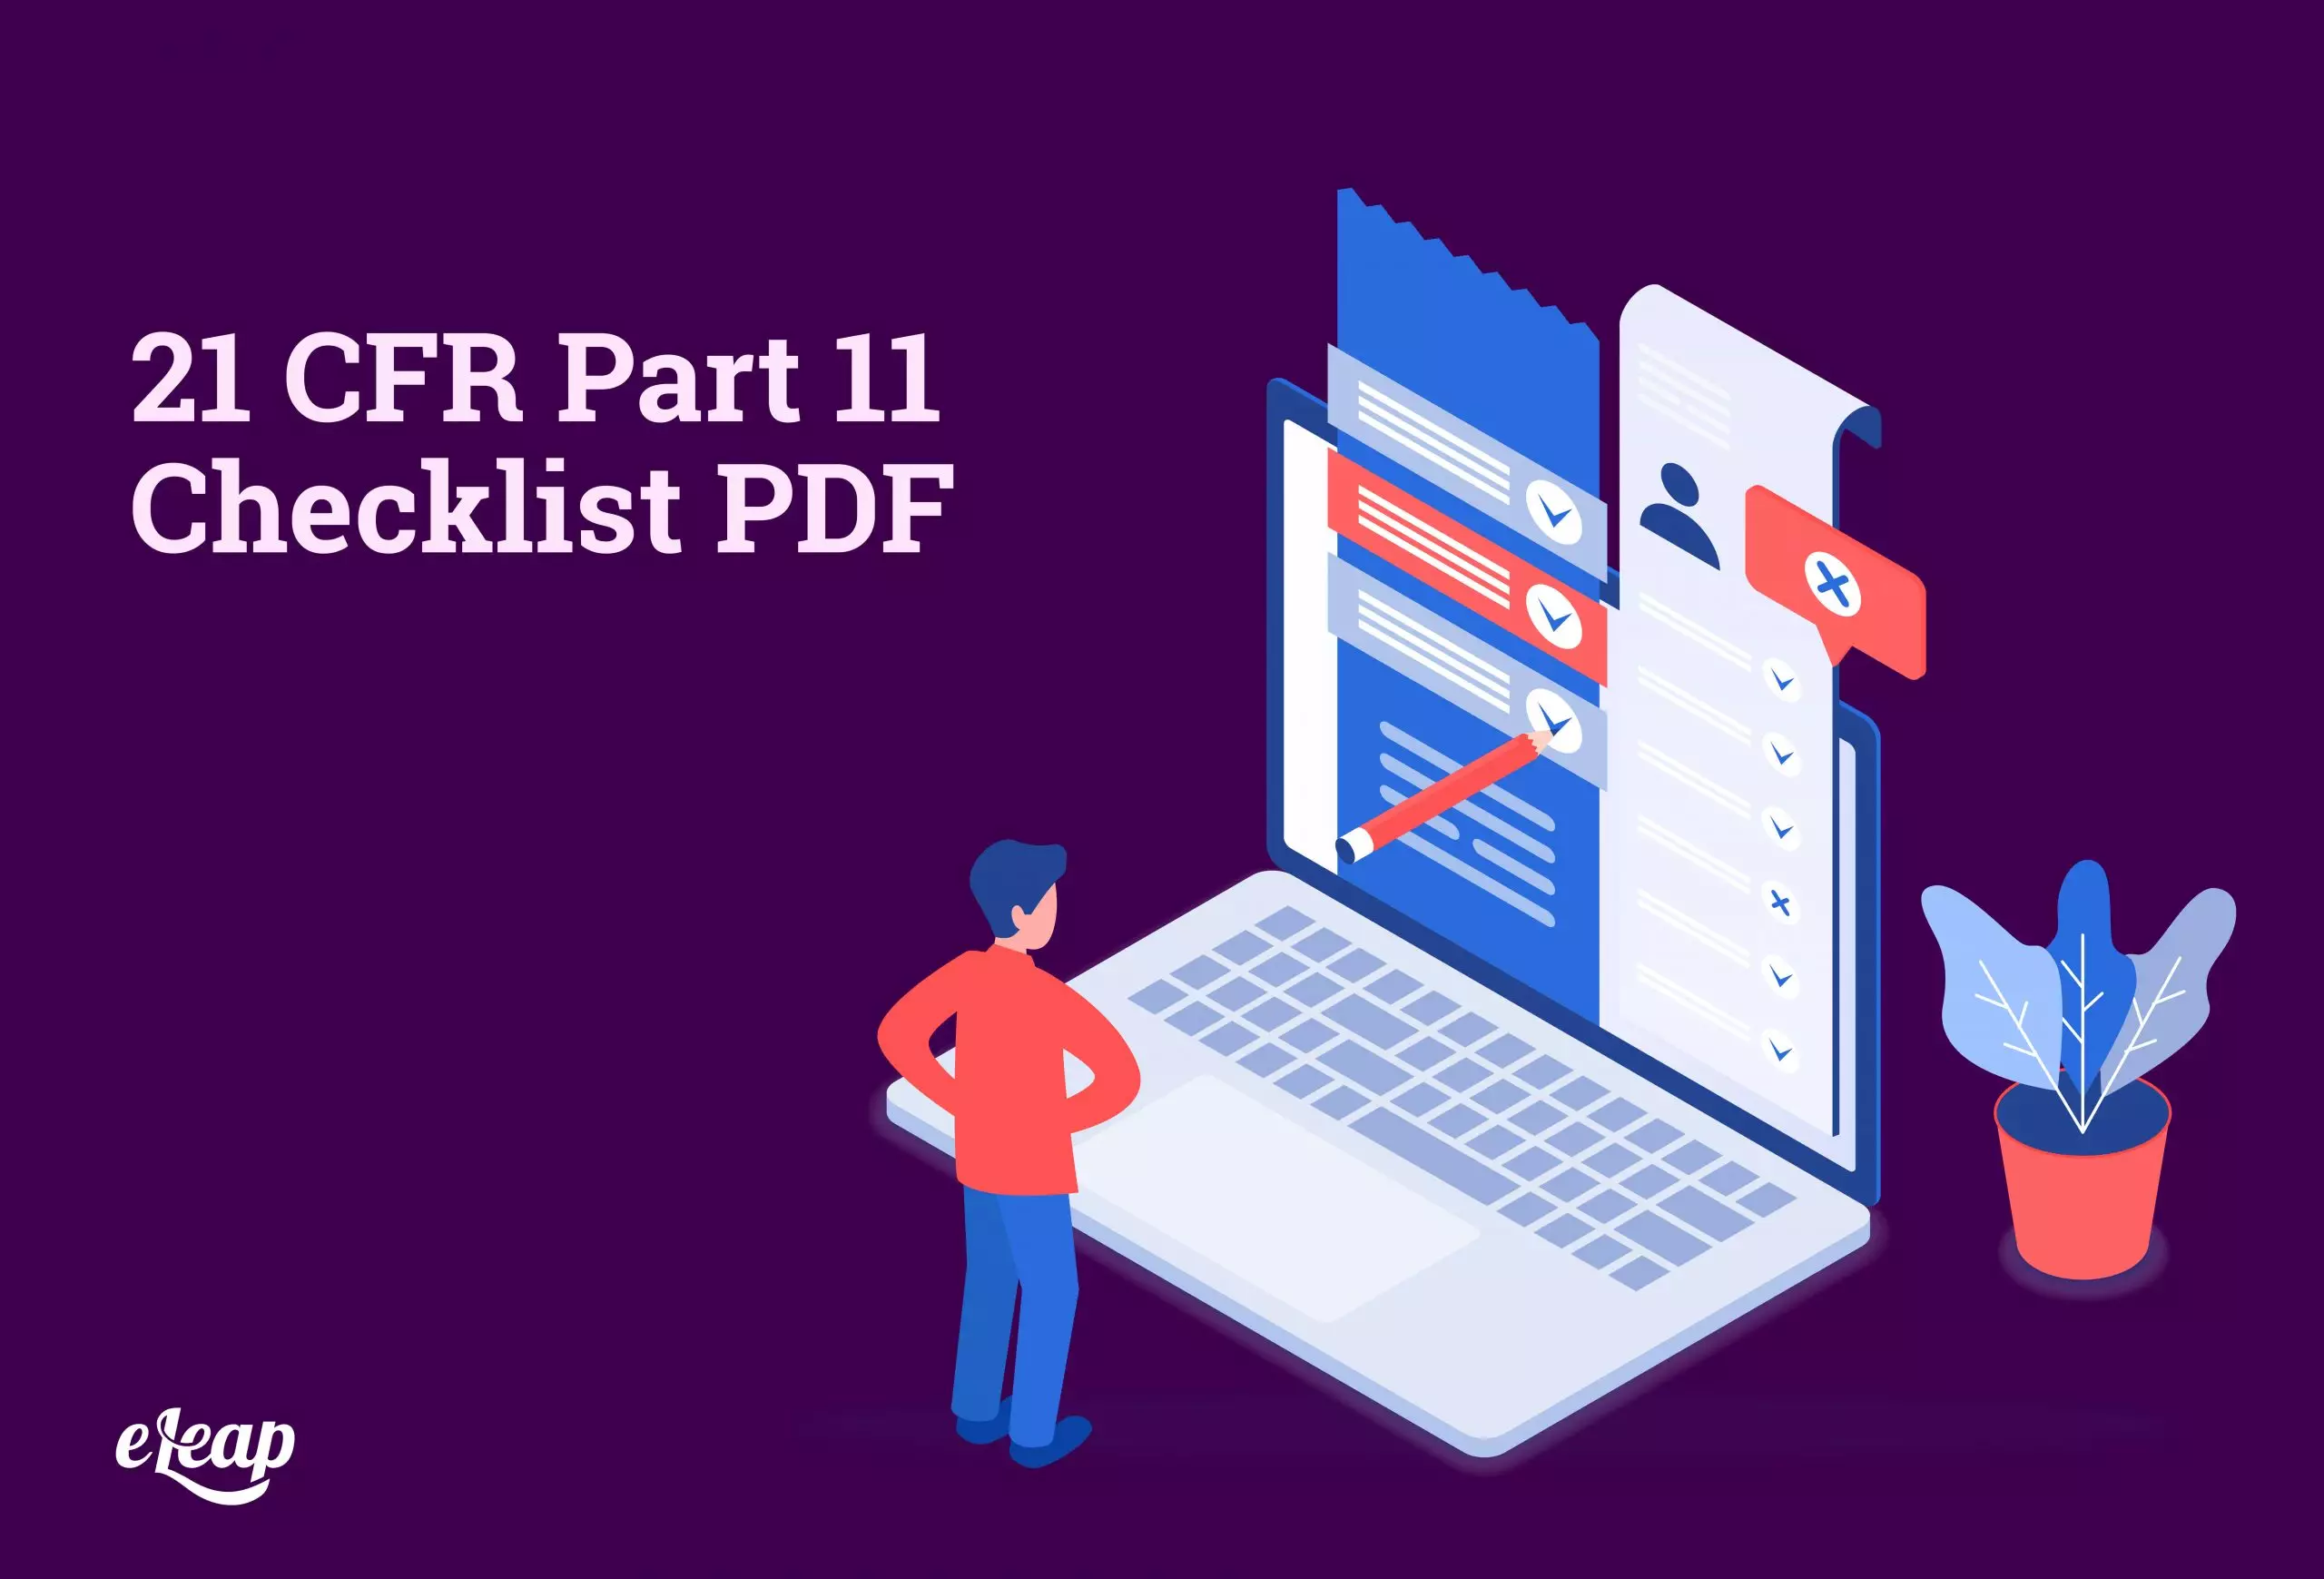 21 CFR Part 11 Checklist PDF